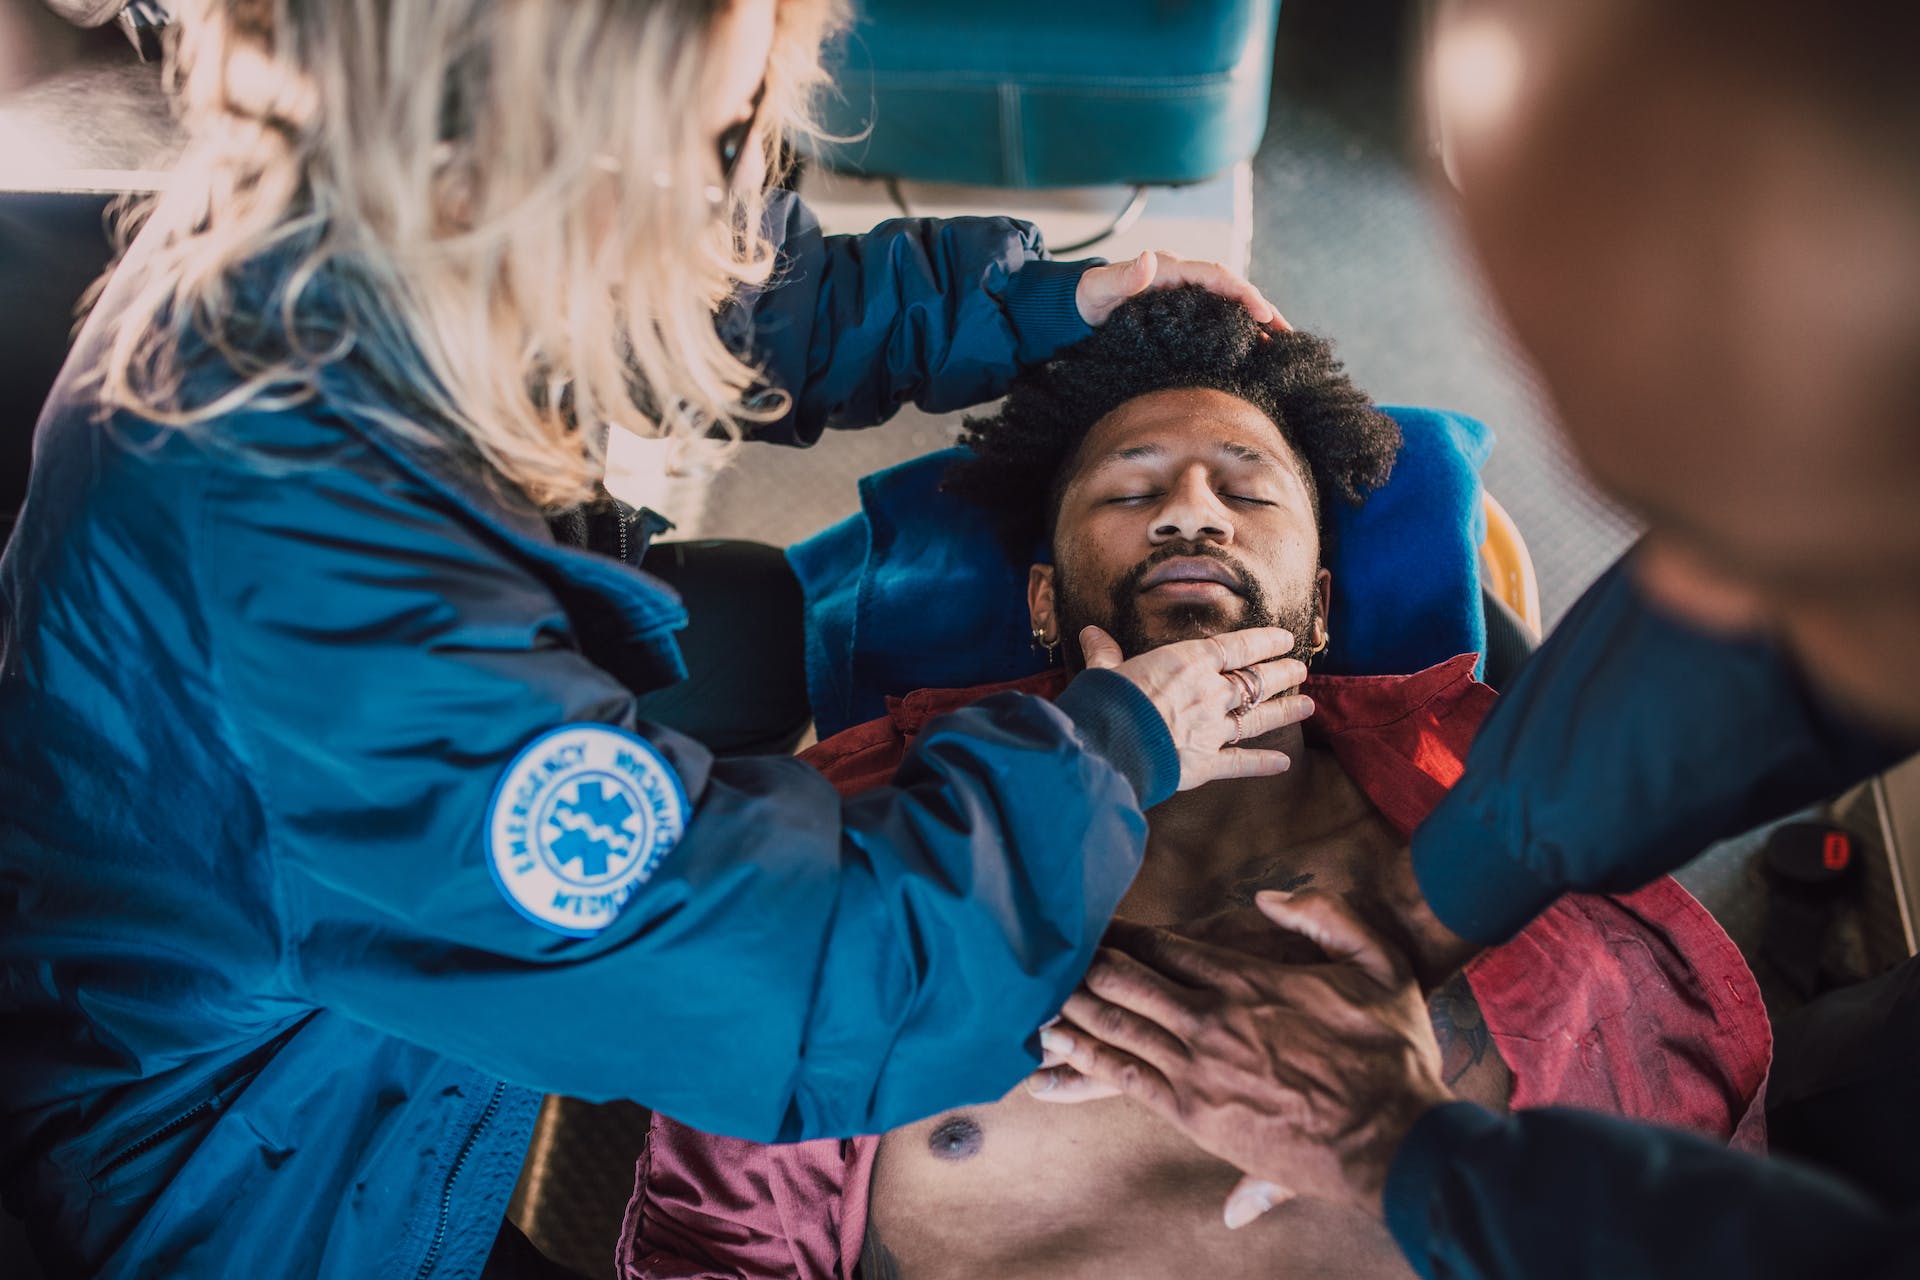 EMT attending to unconscious man